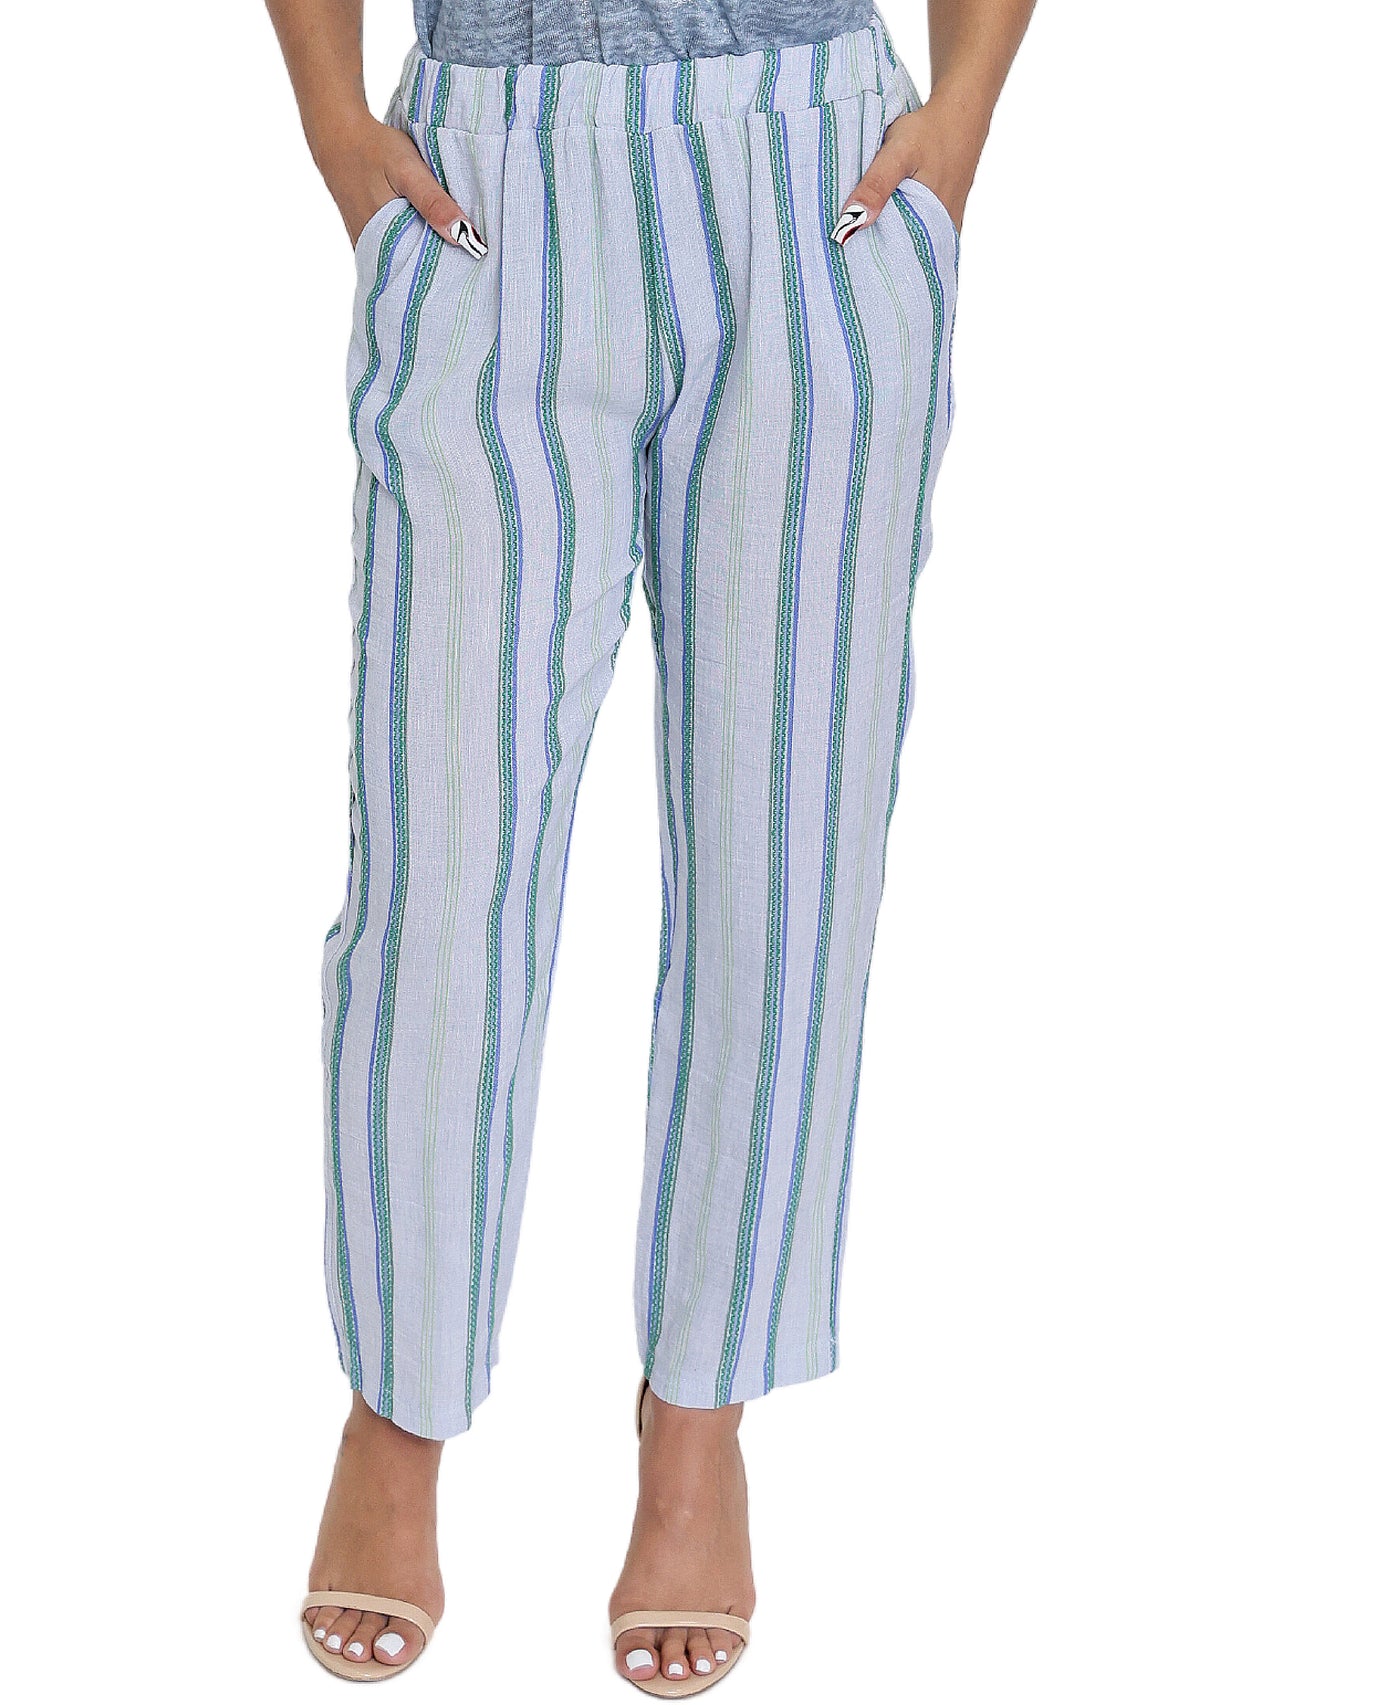 Stripe Pants image 1